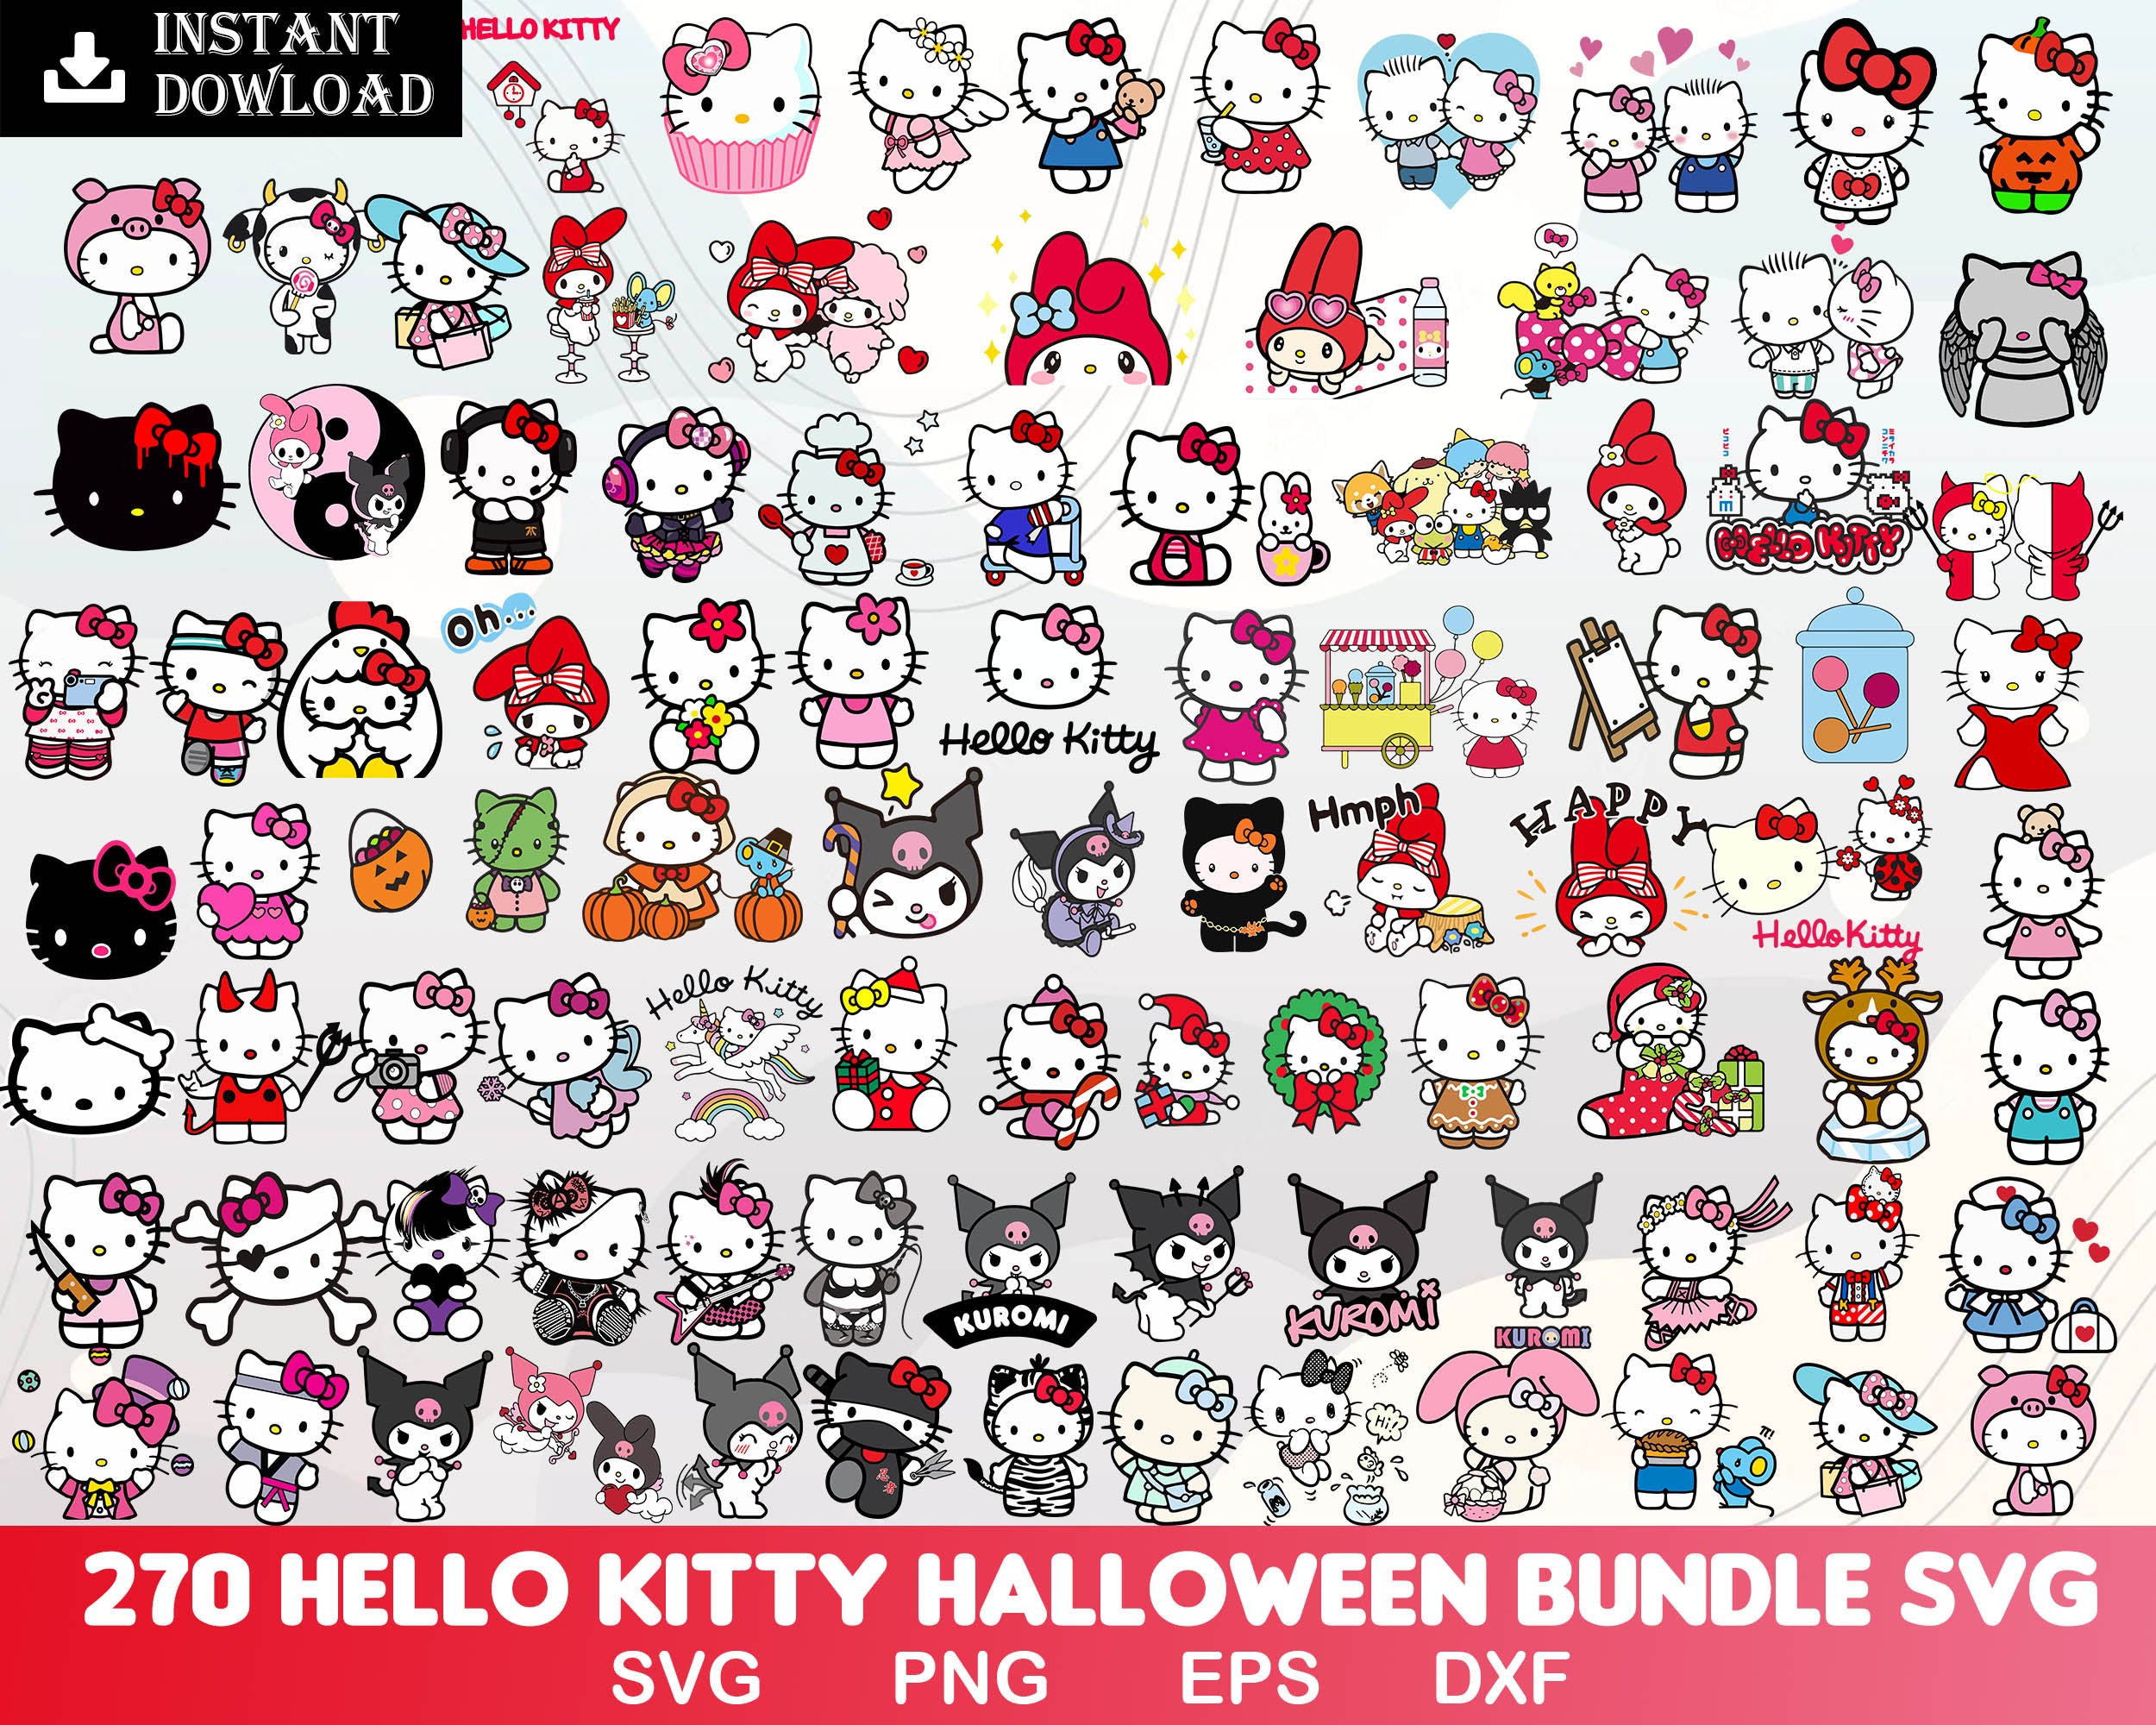 1800+ Mega Halloween Hello Kitty Bundle svg, Kawaii kitty halloween svg, eps, png, dxf, Horror kitty digital files.